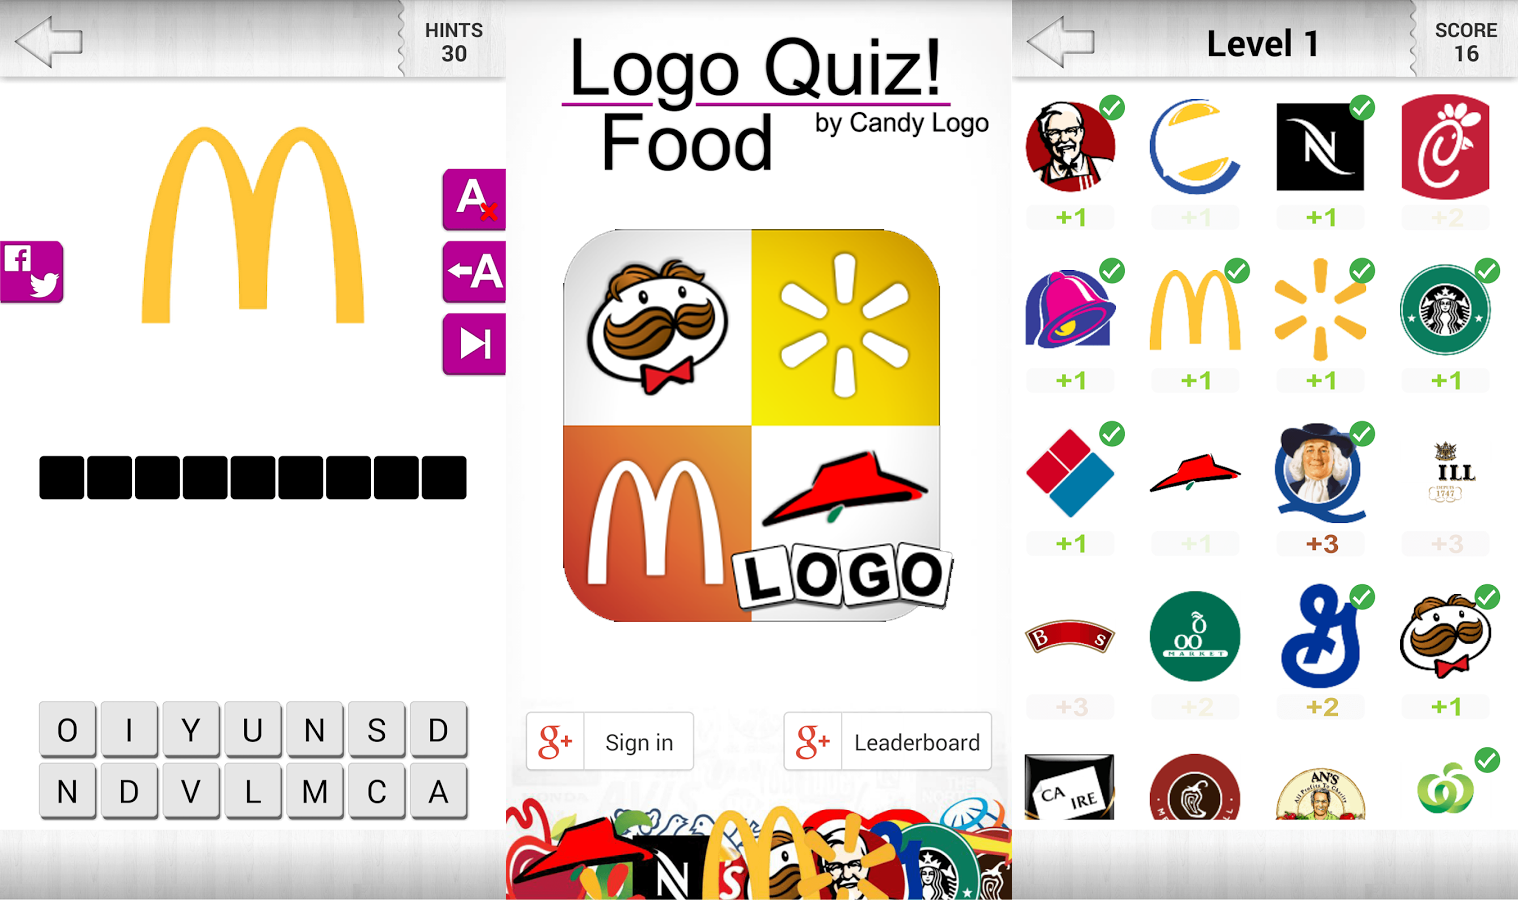 Food Company Logos And Names Logo Design Ideas